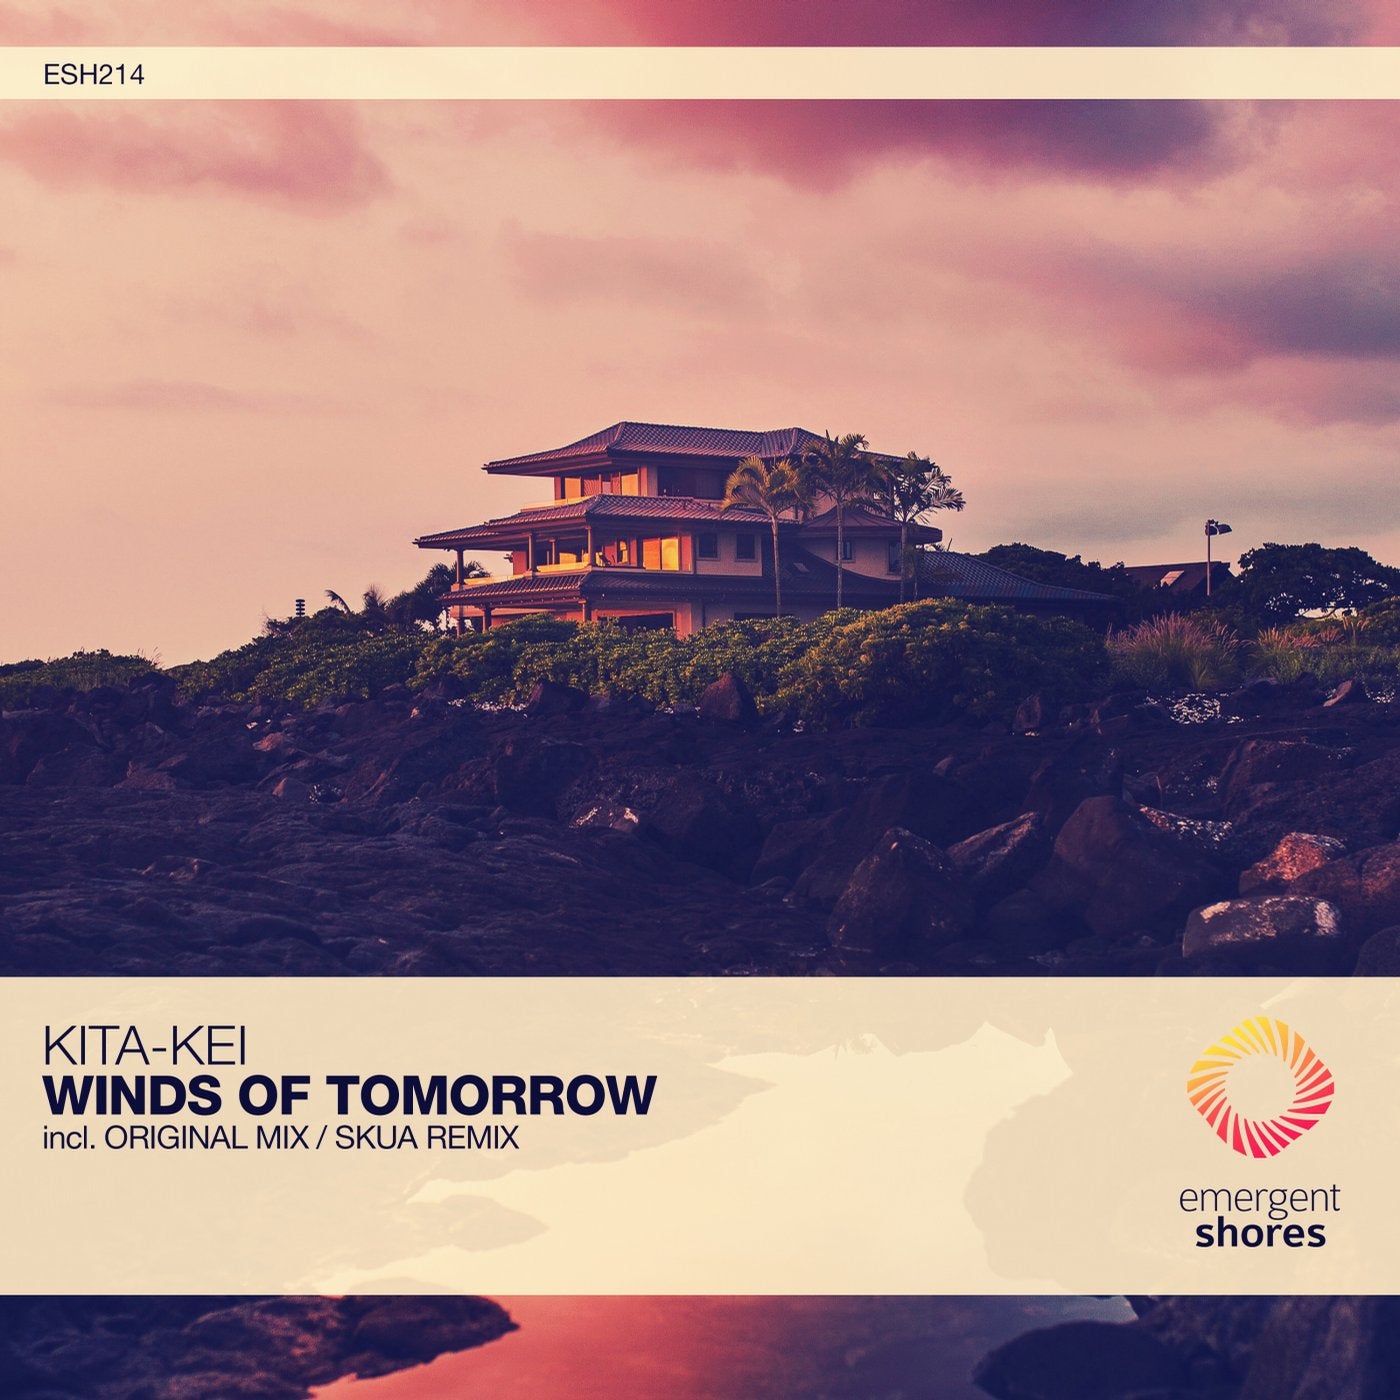 Winds of Tomorrow